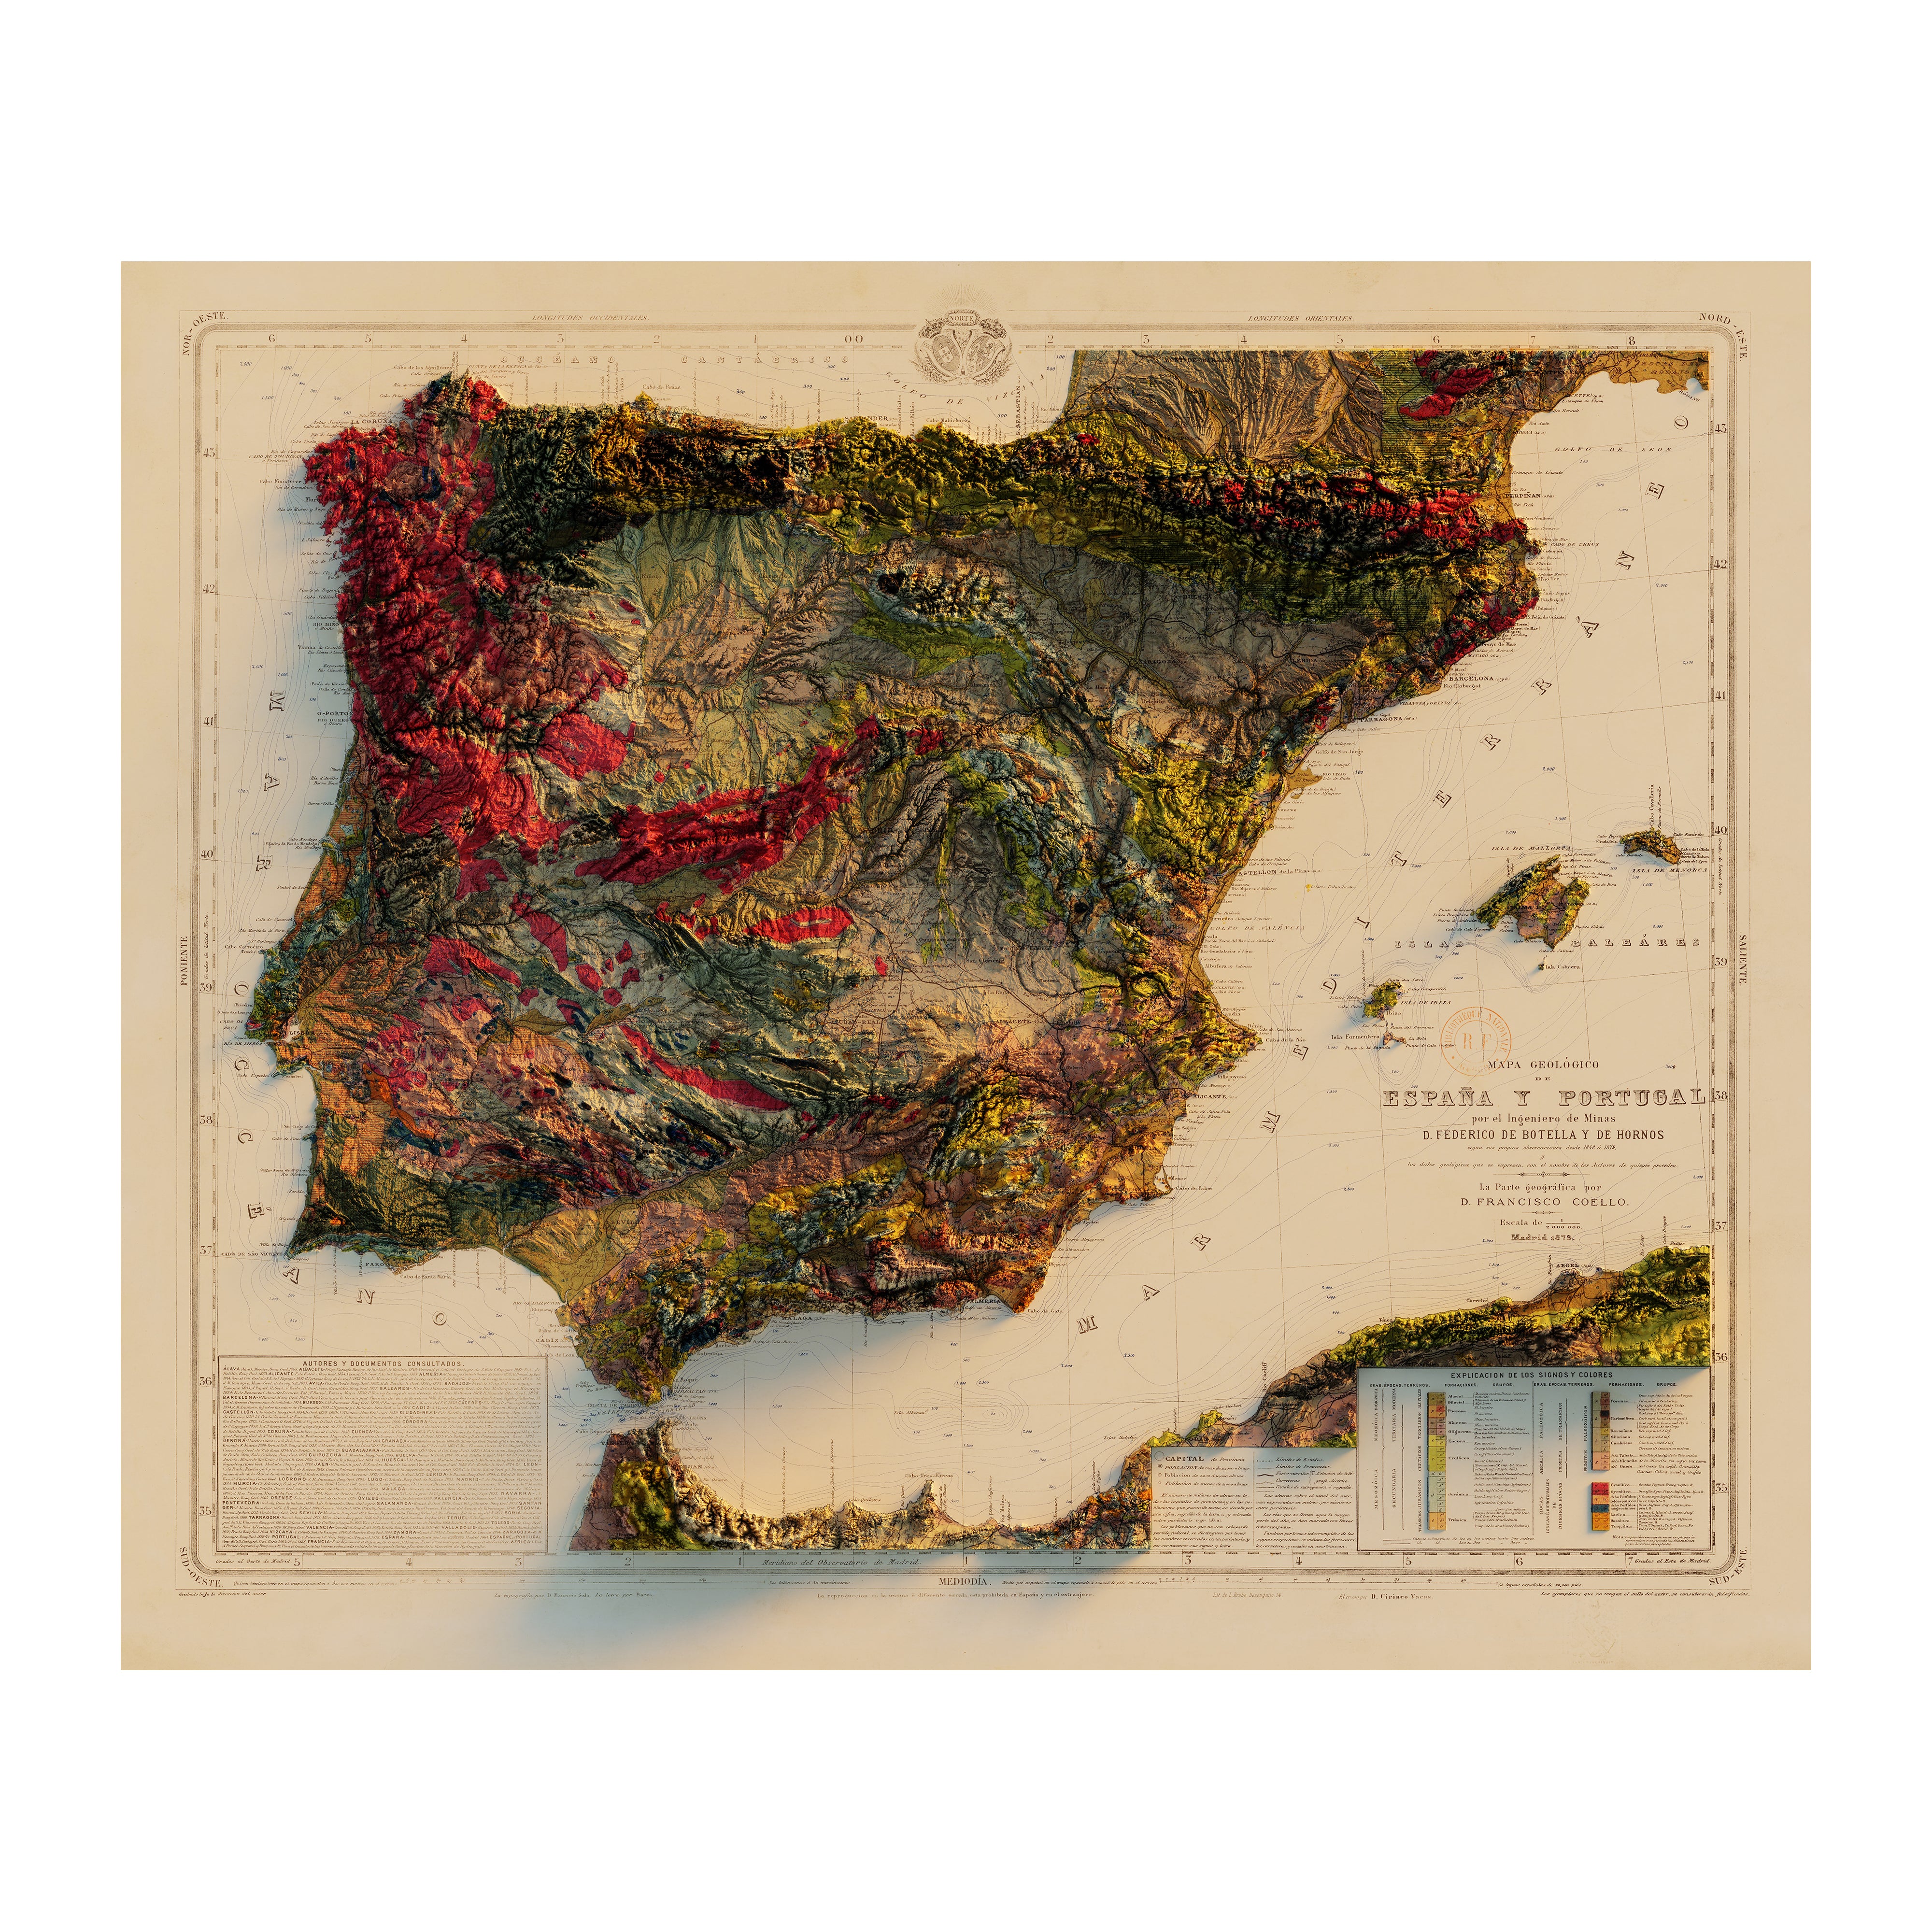 Foto mural mapa Portugal Espanha